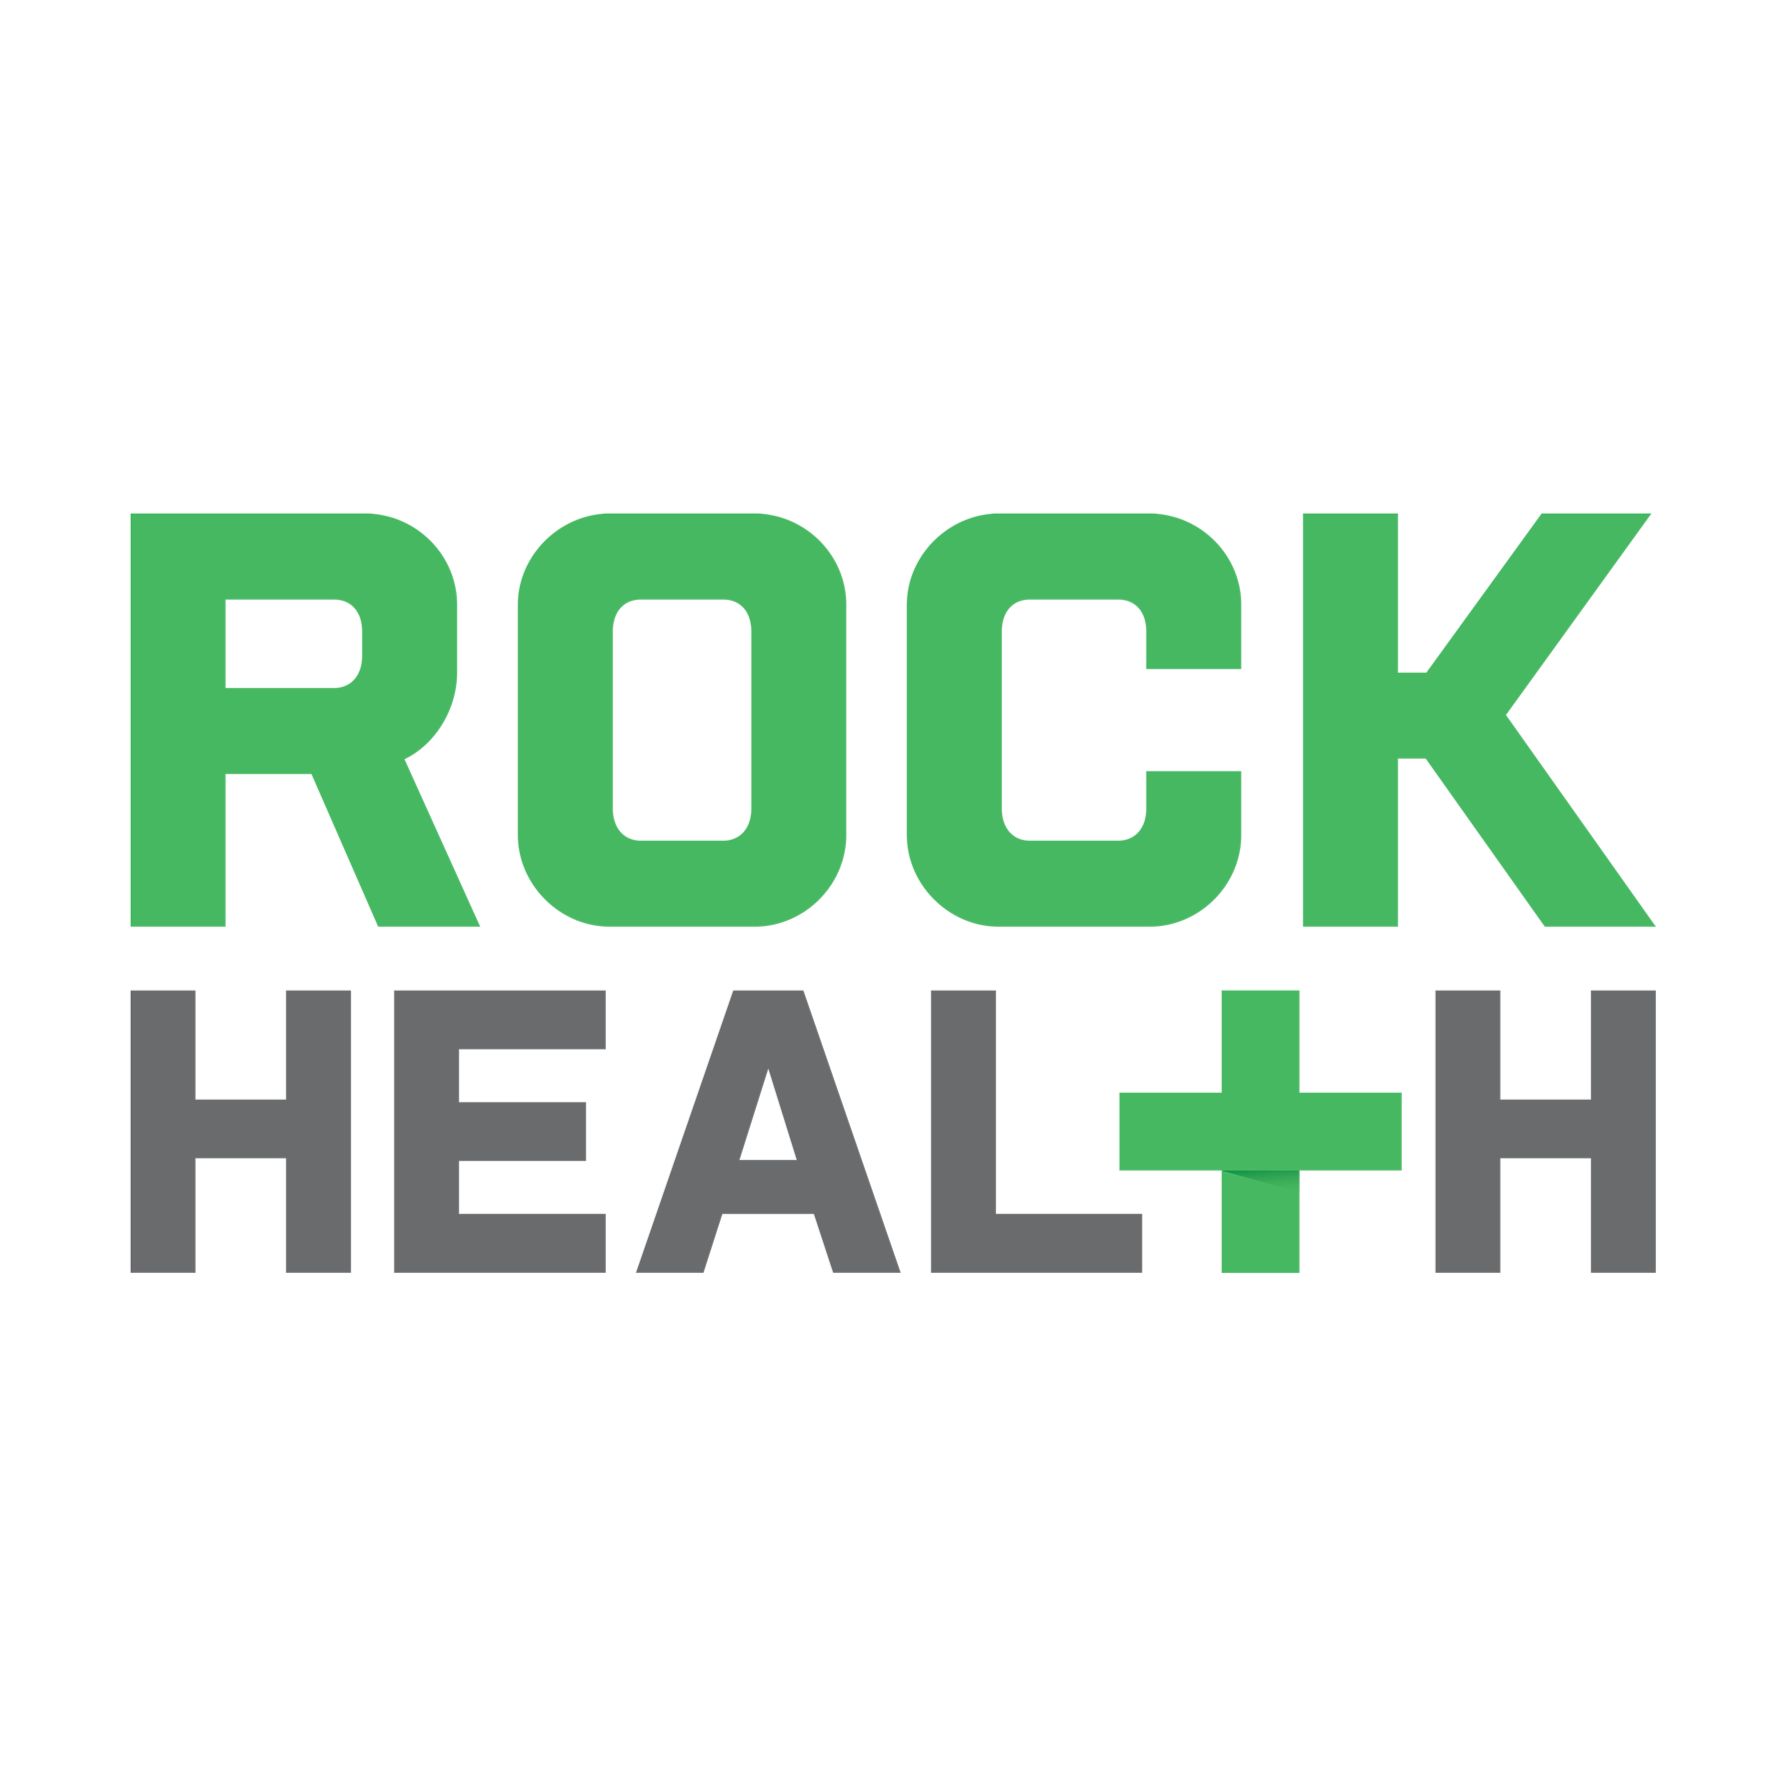 Rock Health Logo